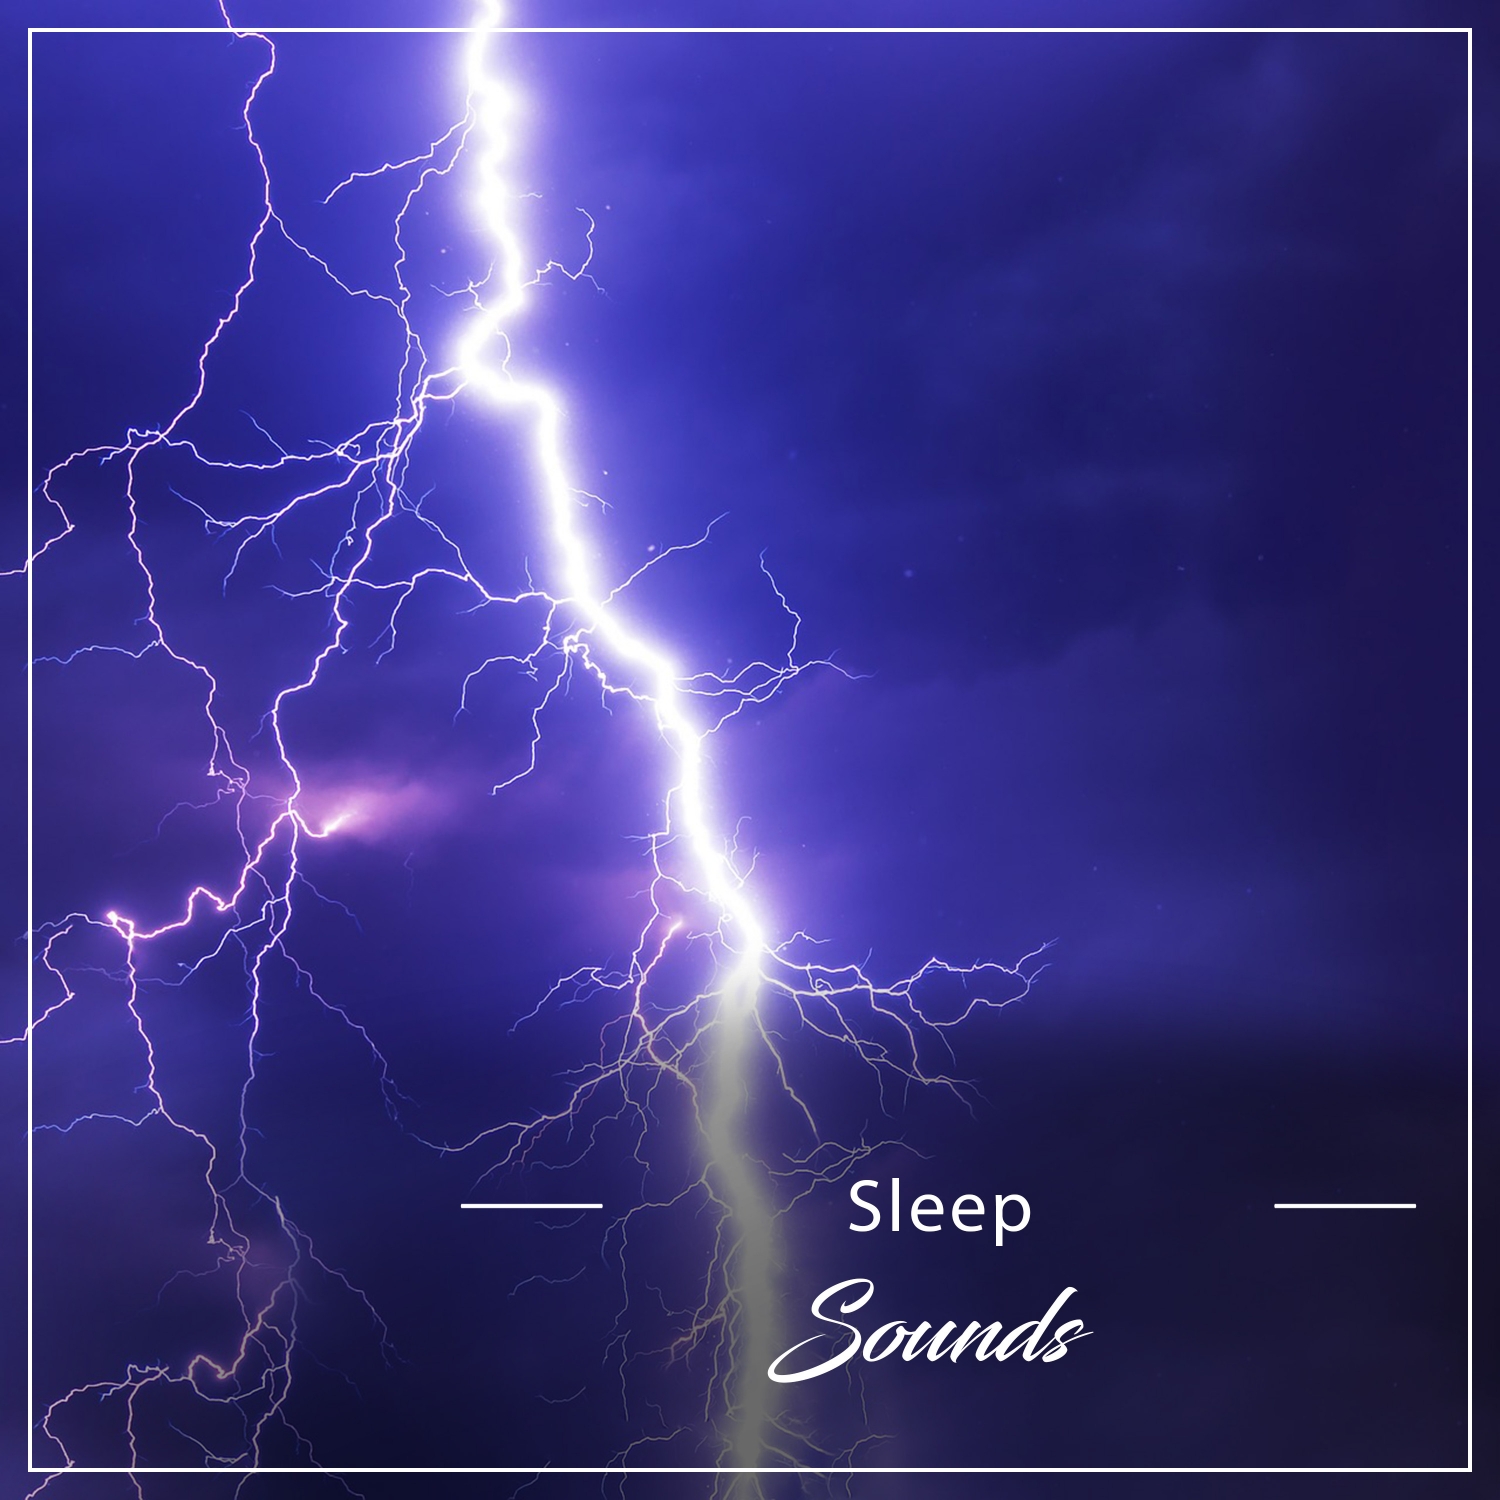 22 Harmonic Sounds to Aid Sleep